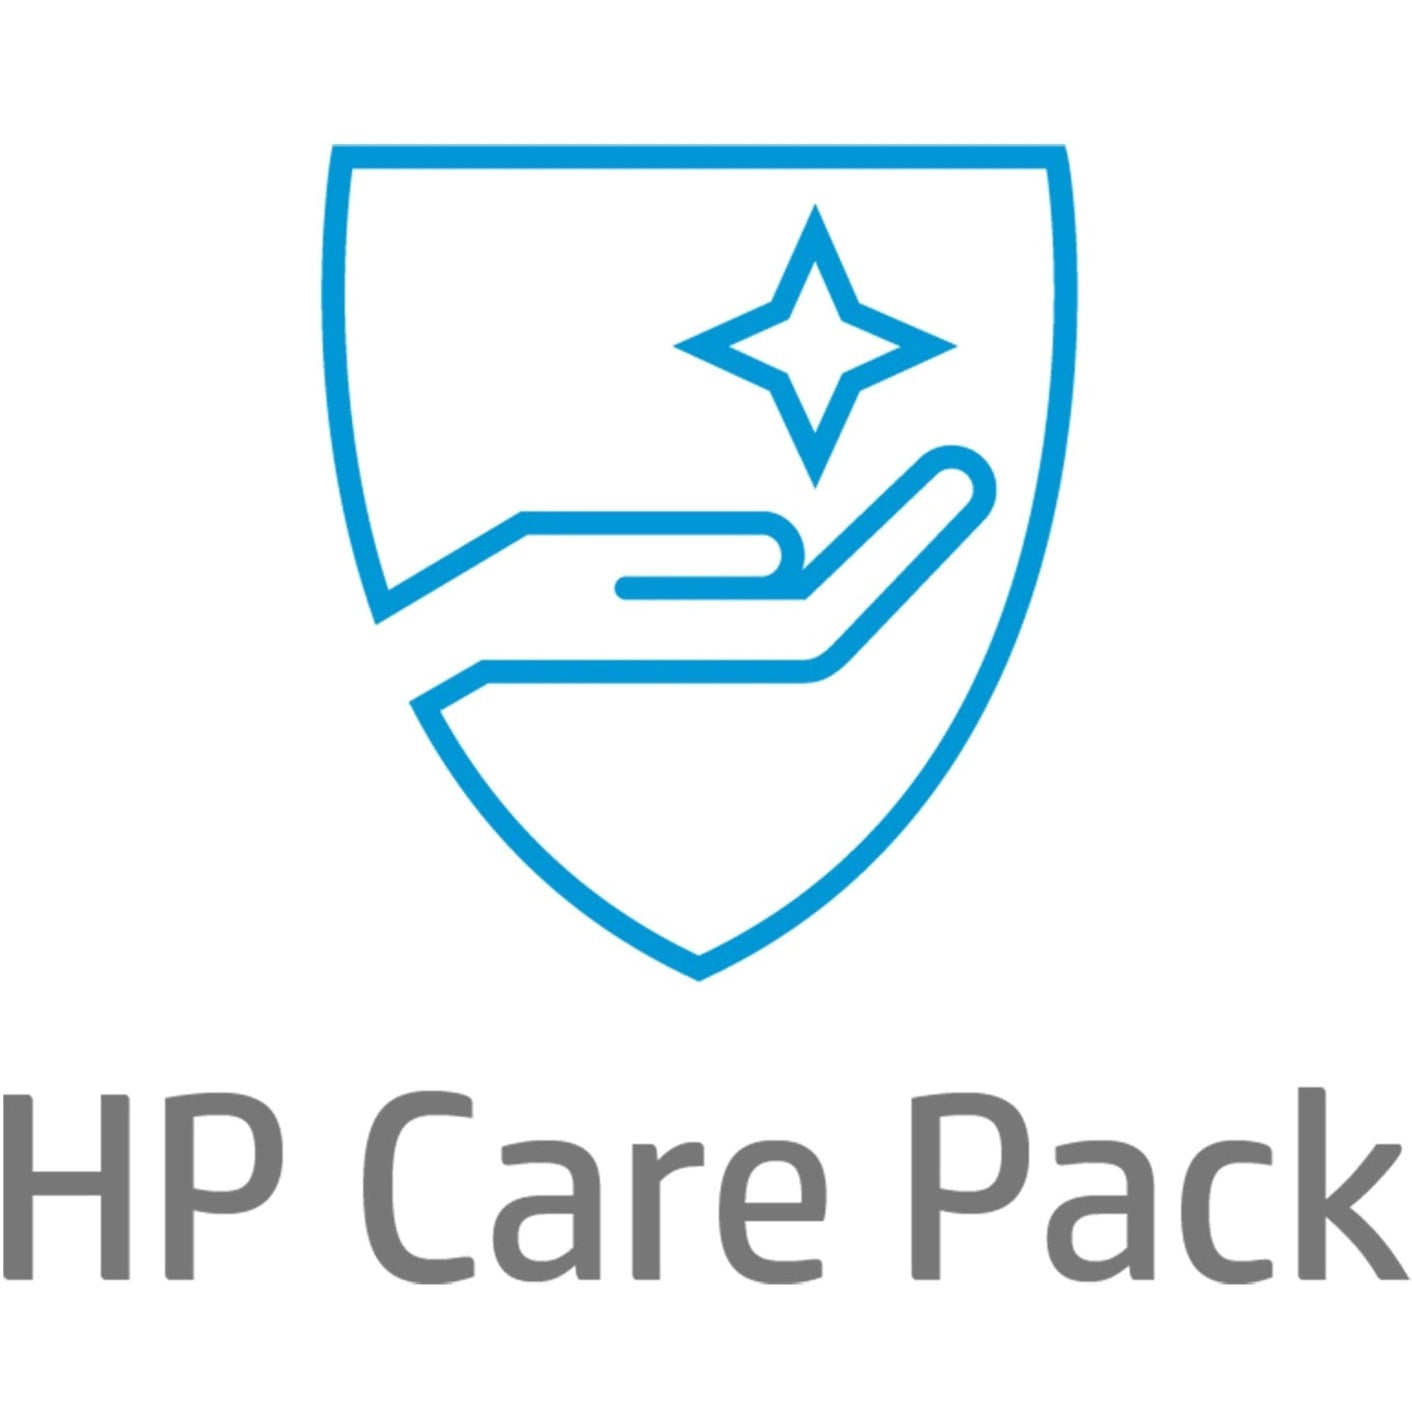 HP Care Pack - 3 Year - Service - 9 x 5 - Technical (UJ414E)